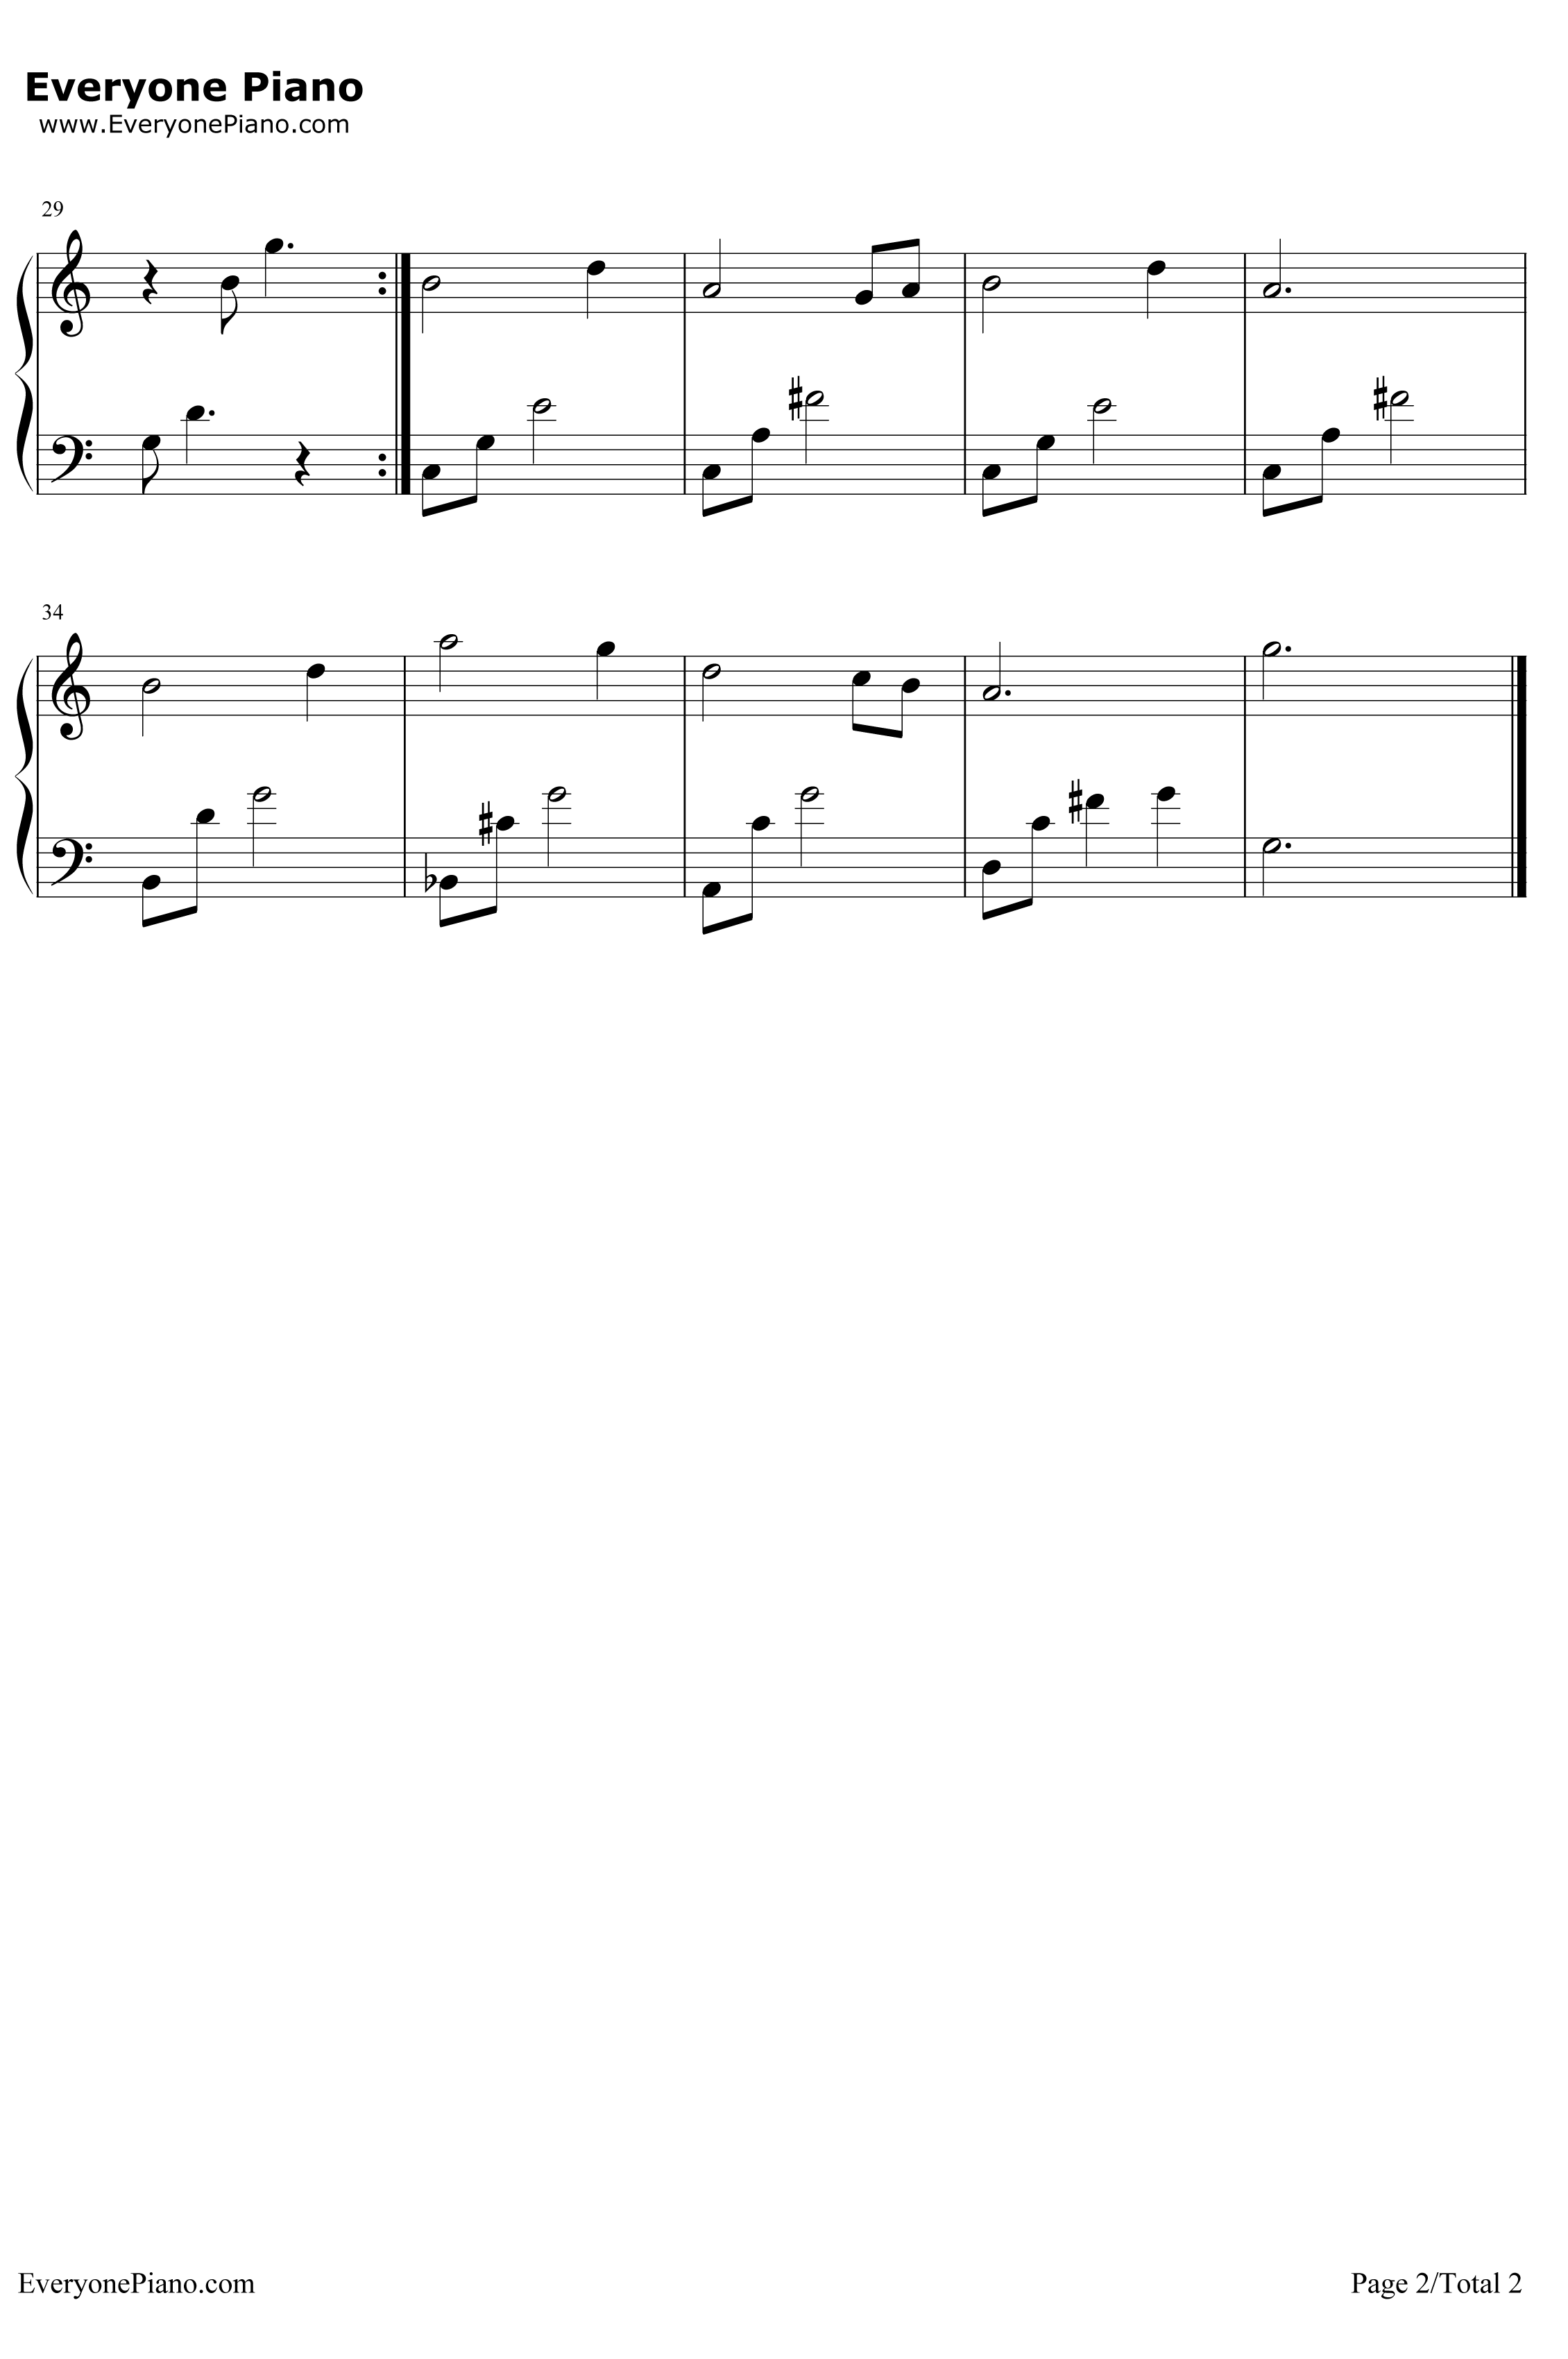 Zelda's Lullaby钢琴谱-近藤浩治-塞尔达传说时之笛2